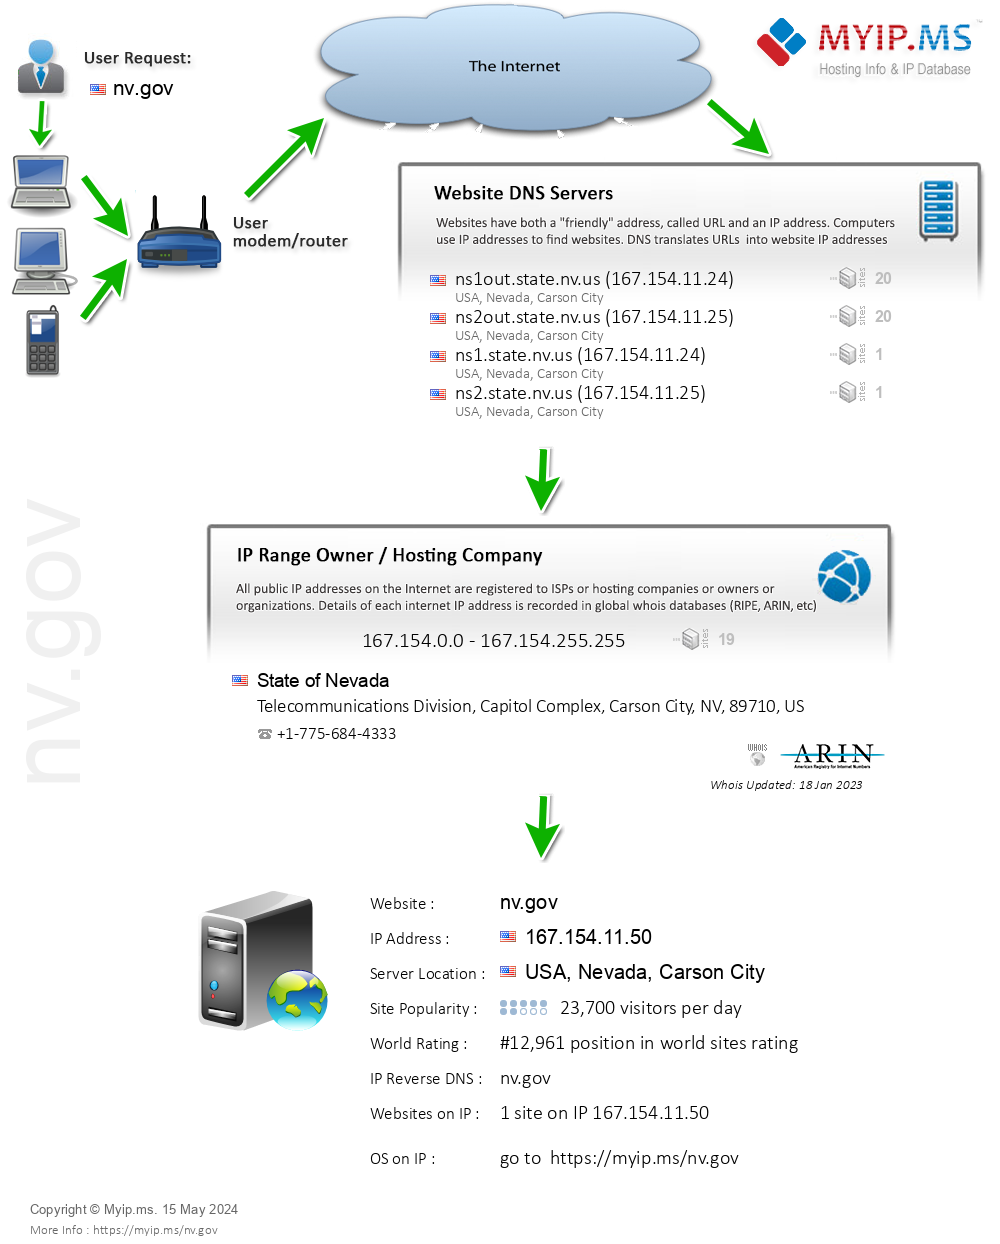 Nv.gov - Website Hosting Visual IP Diagram